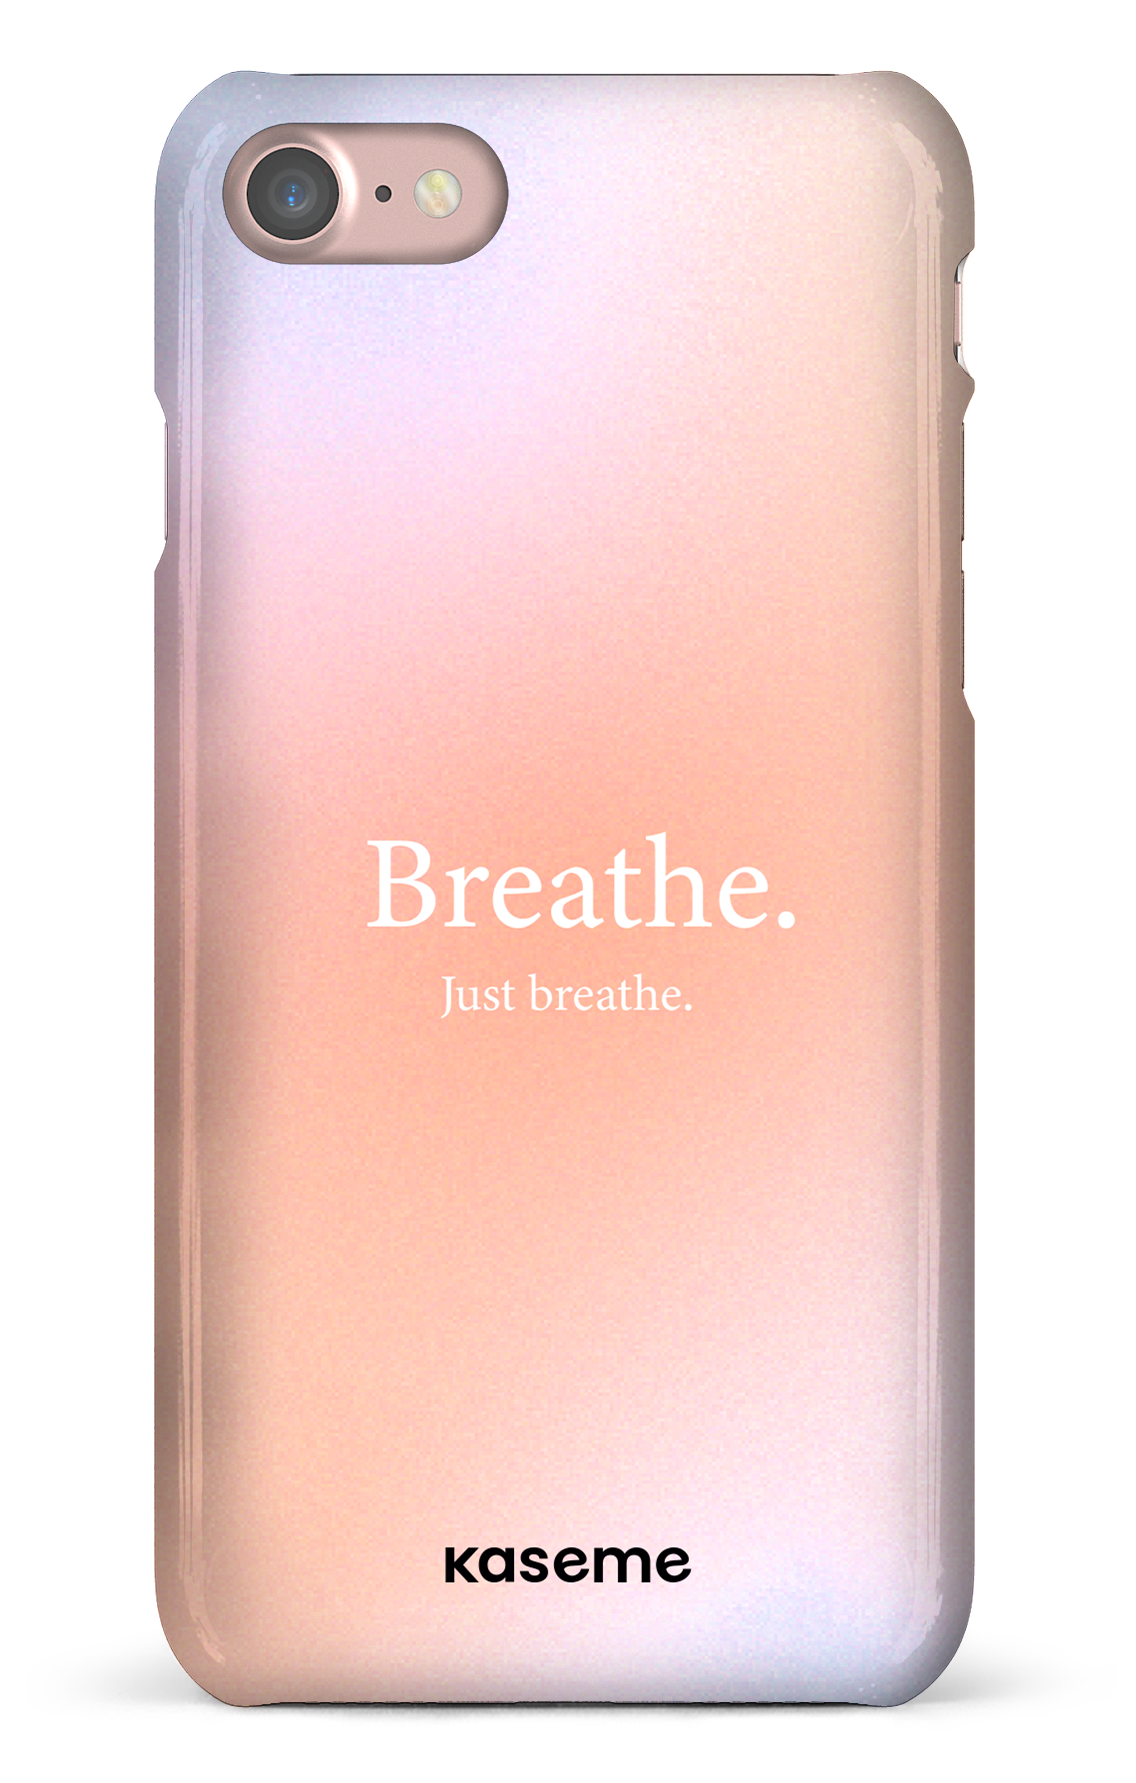 Just breathe - iPhone 7